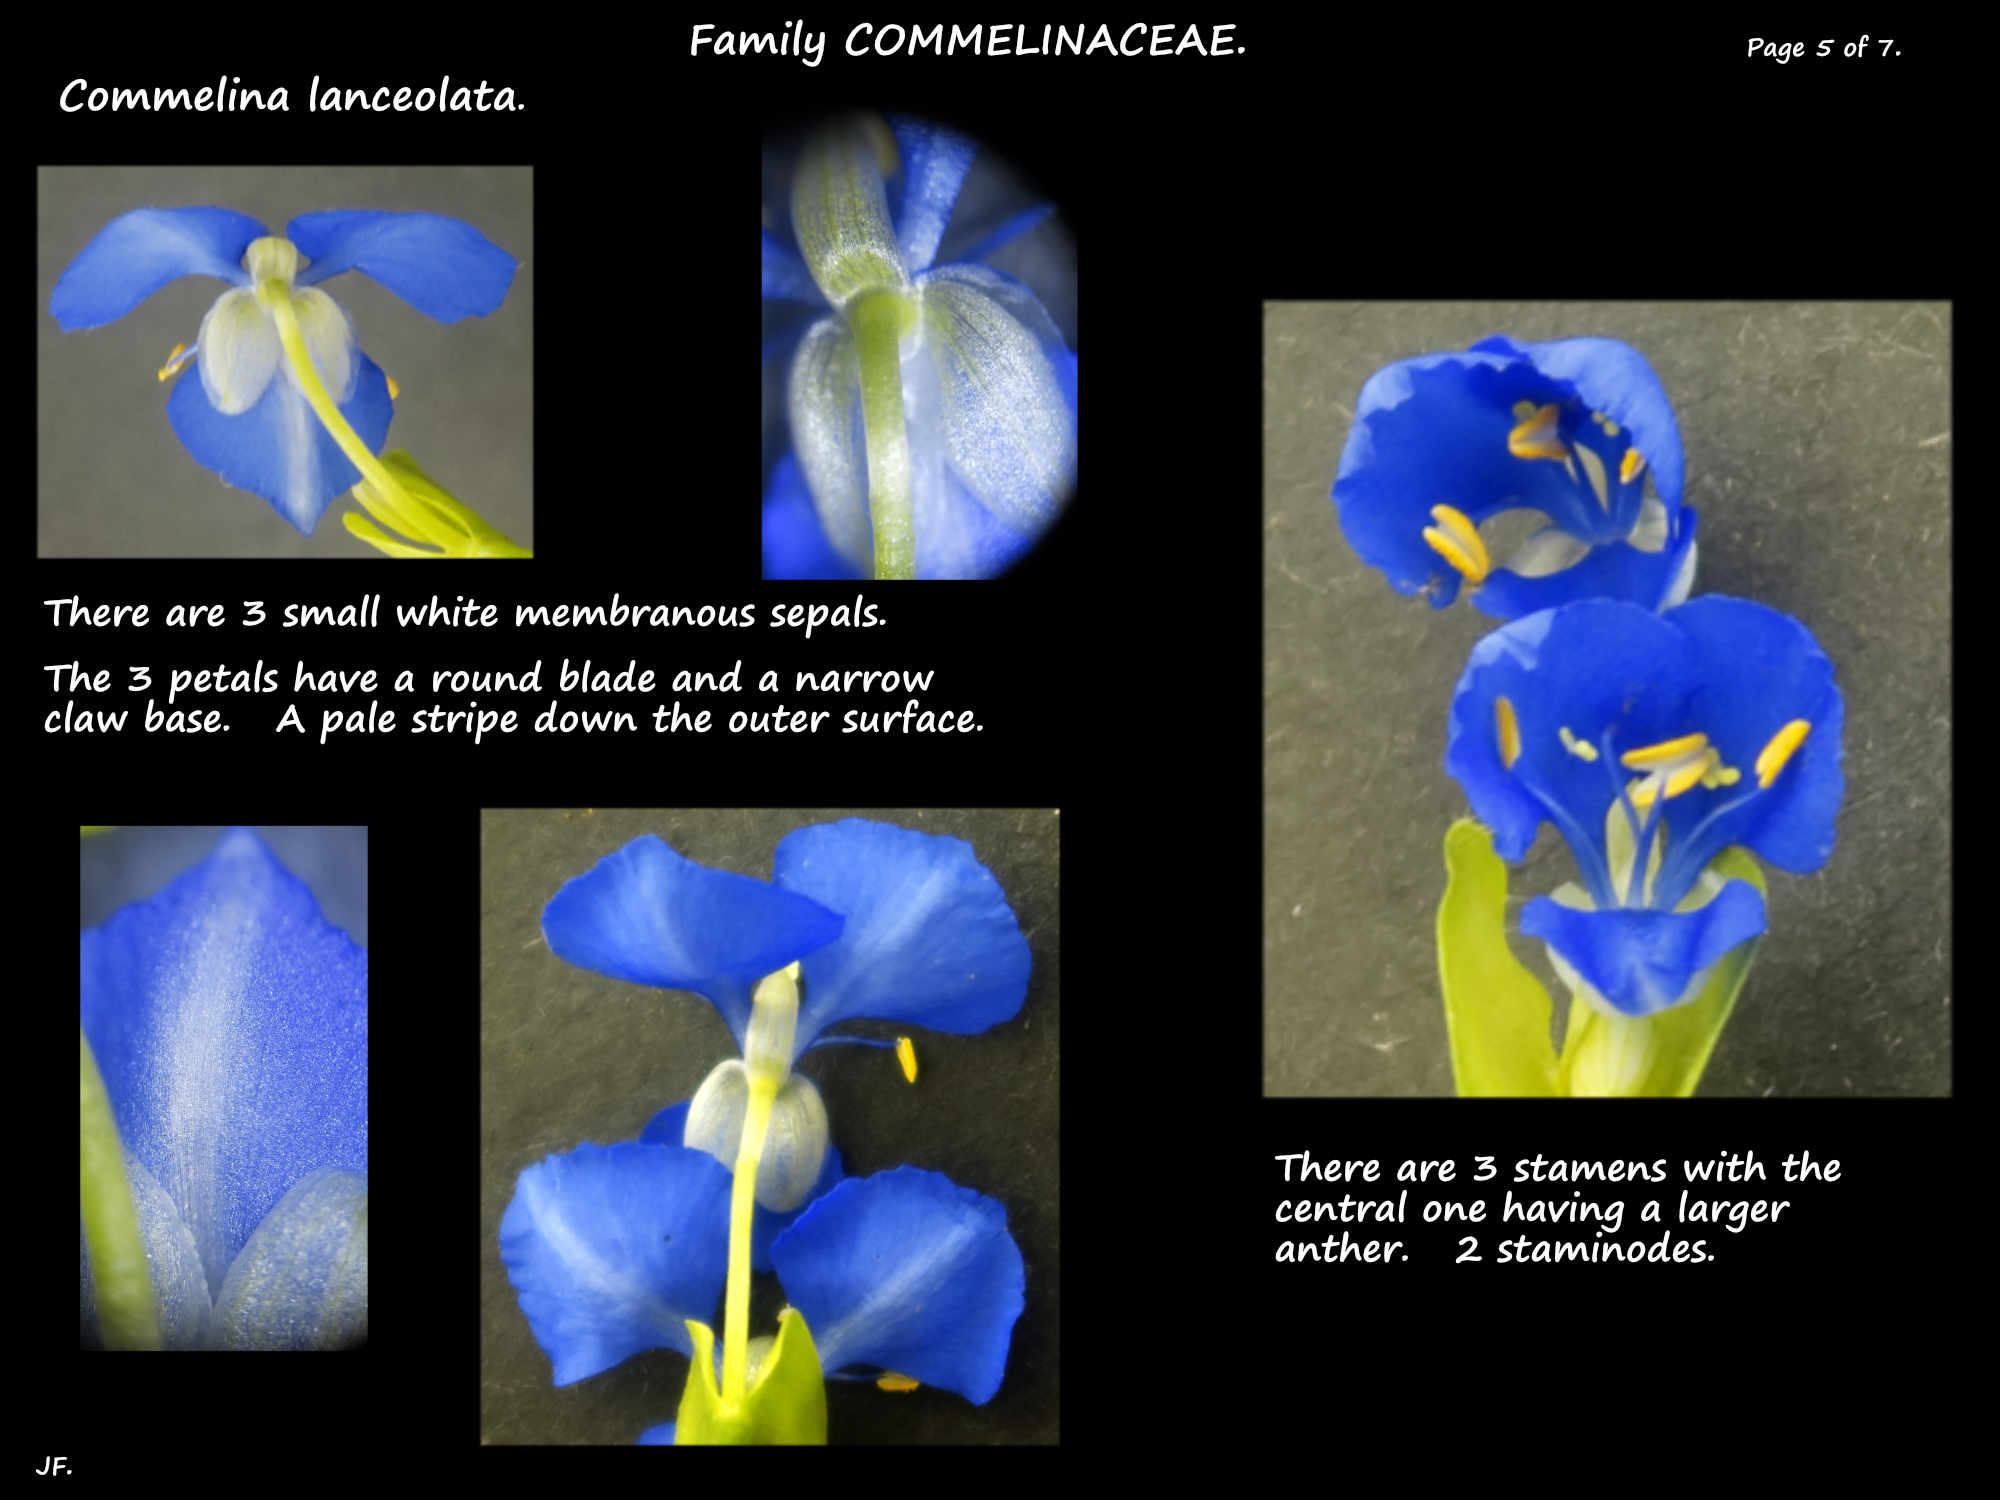 5 The sepals & petals of Commelina lanceolata flowers